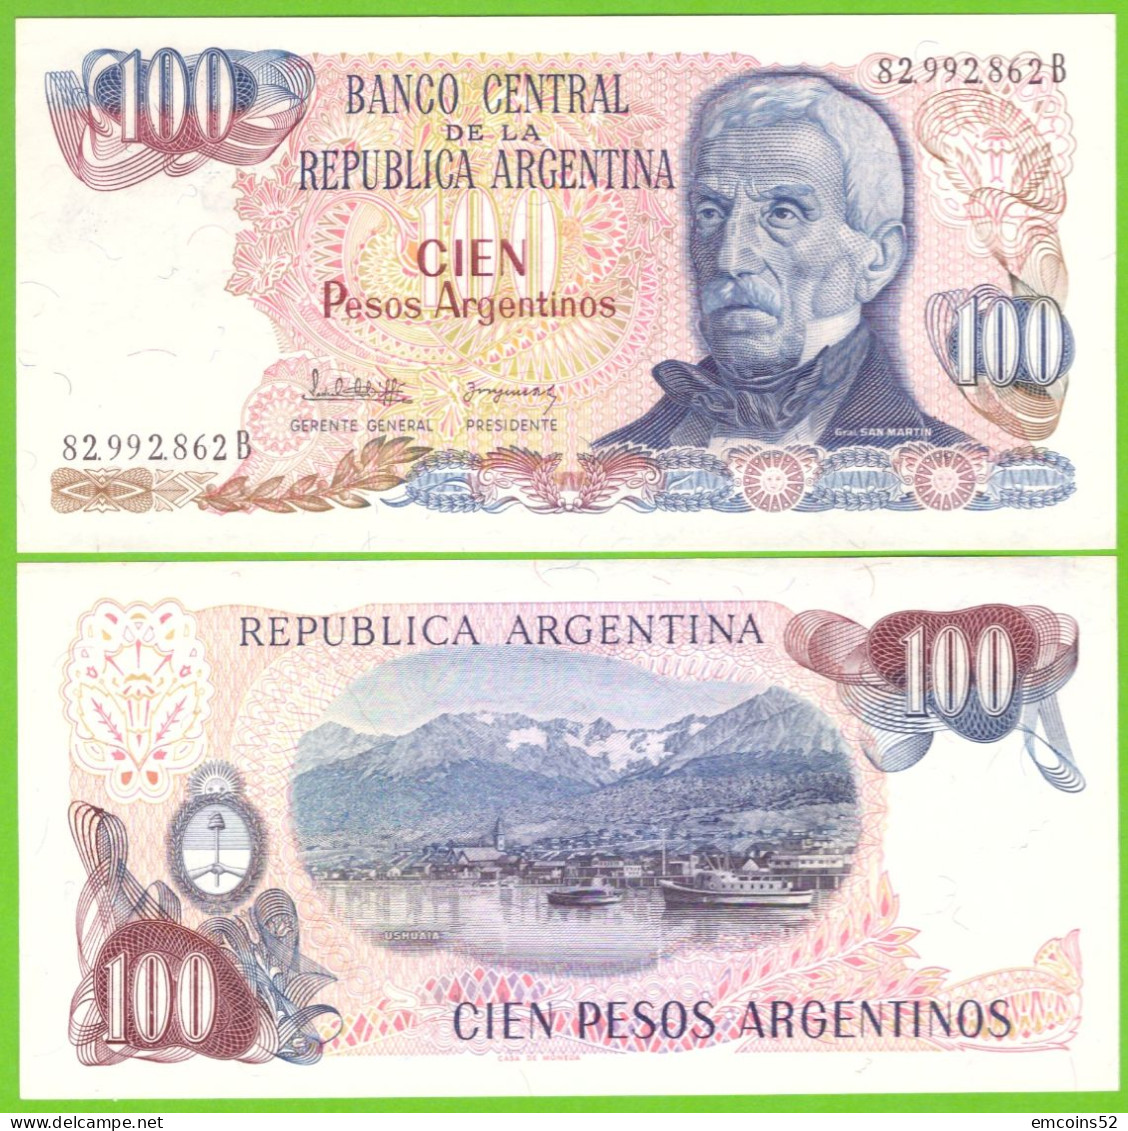 ARGENTINA 100 PESOS ND 1983/1985 P-315a(1) UNC - Argentinien